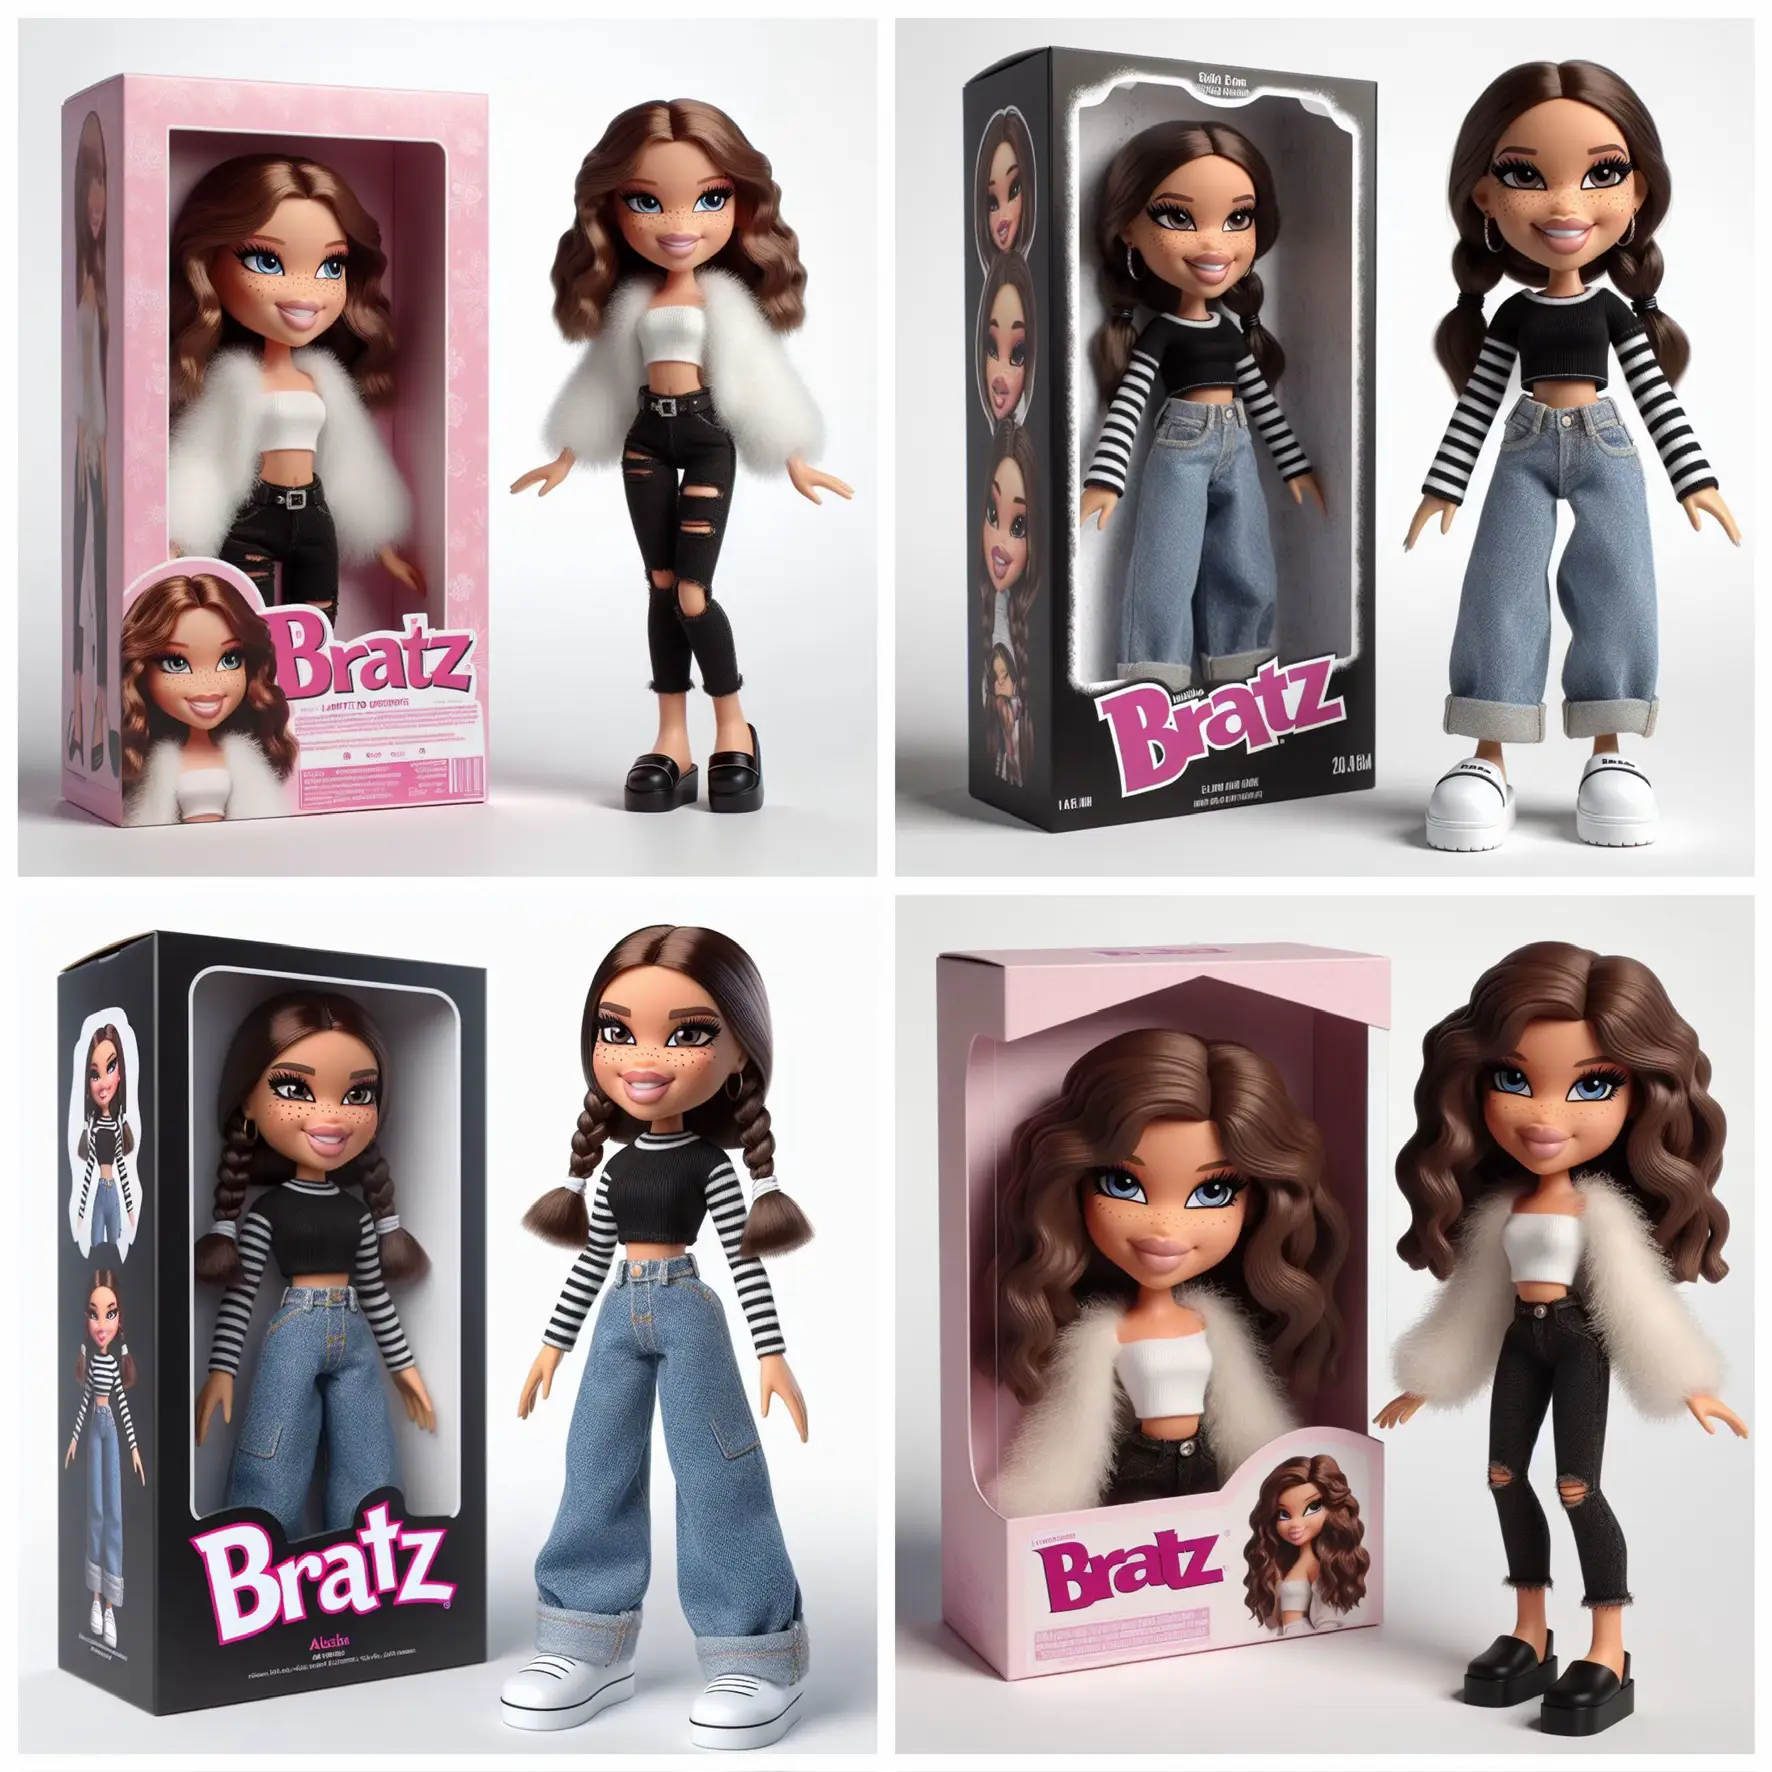 Hot Summer Dayz  Bratz girls, Brat doll, Bratz doll outfits